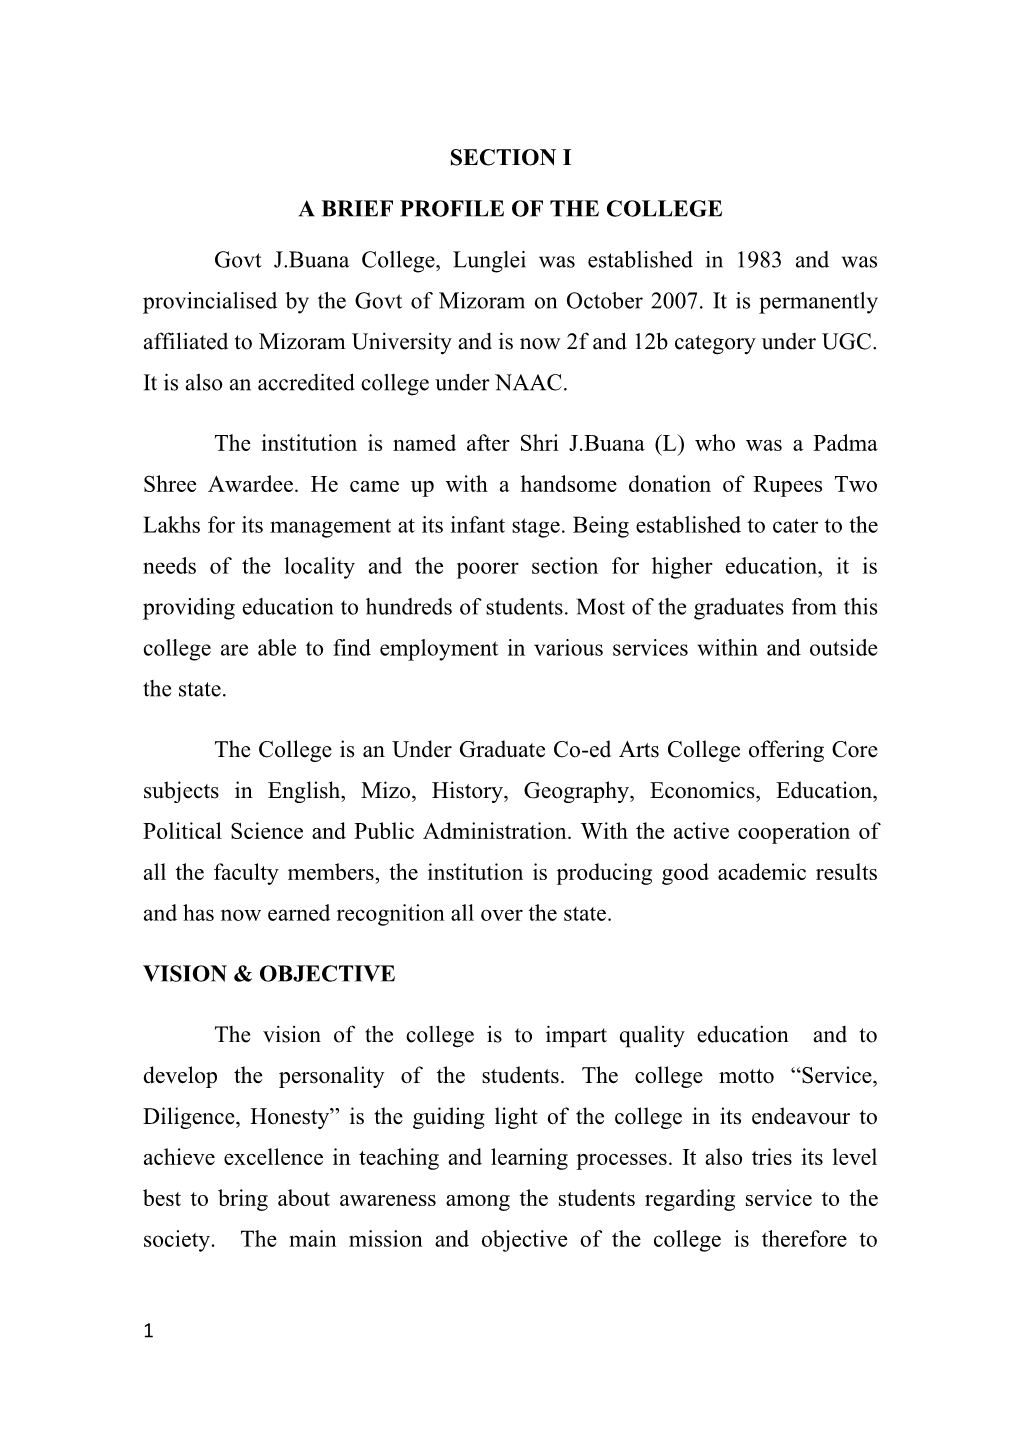 SECTION I a BRIEF PROFILE of the COLLEGE Govt J.Buana College